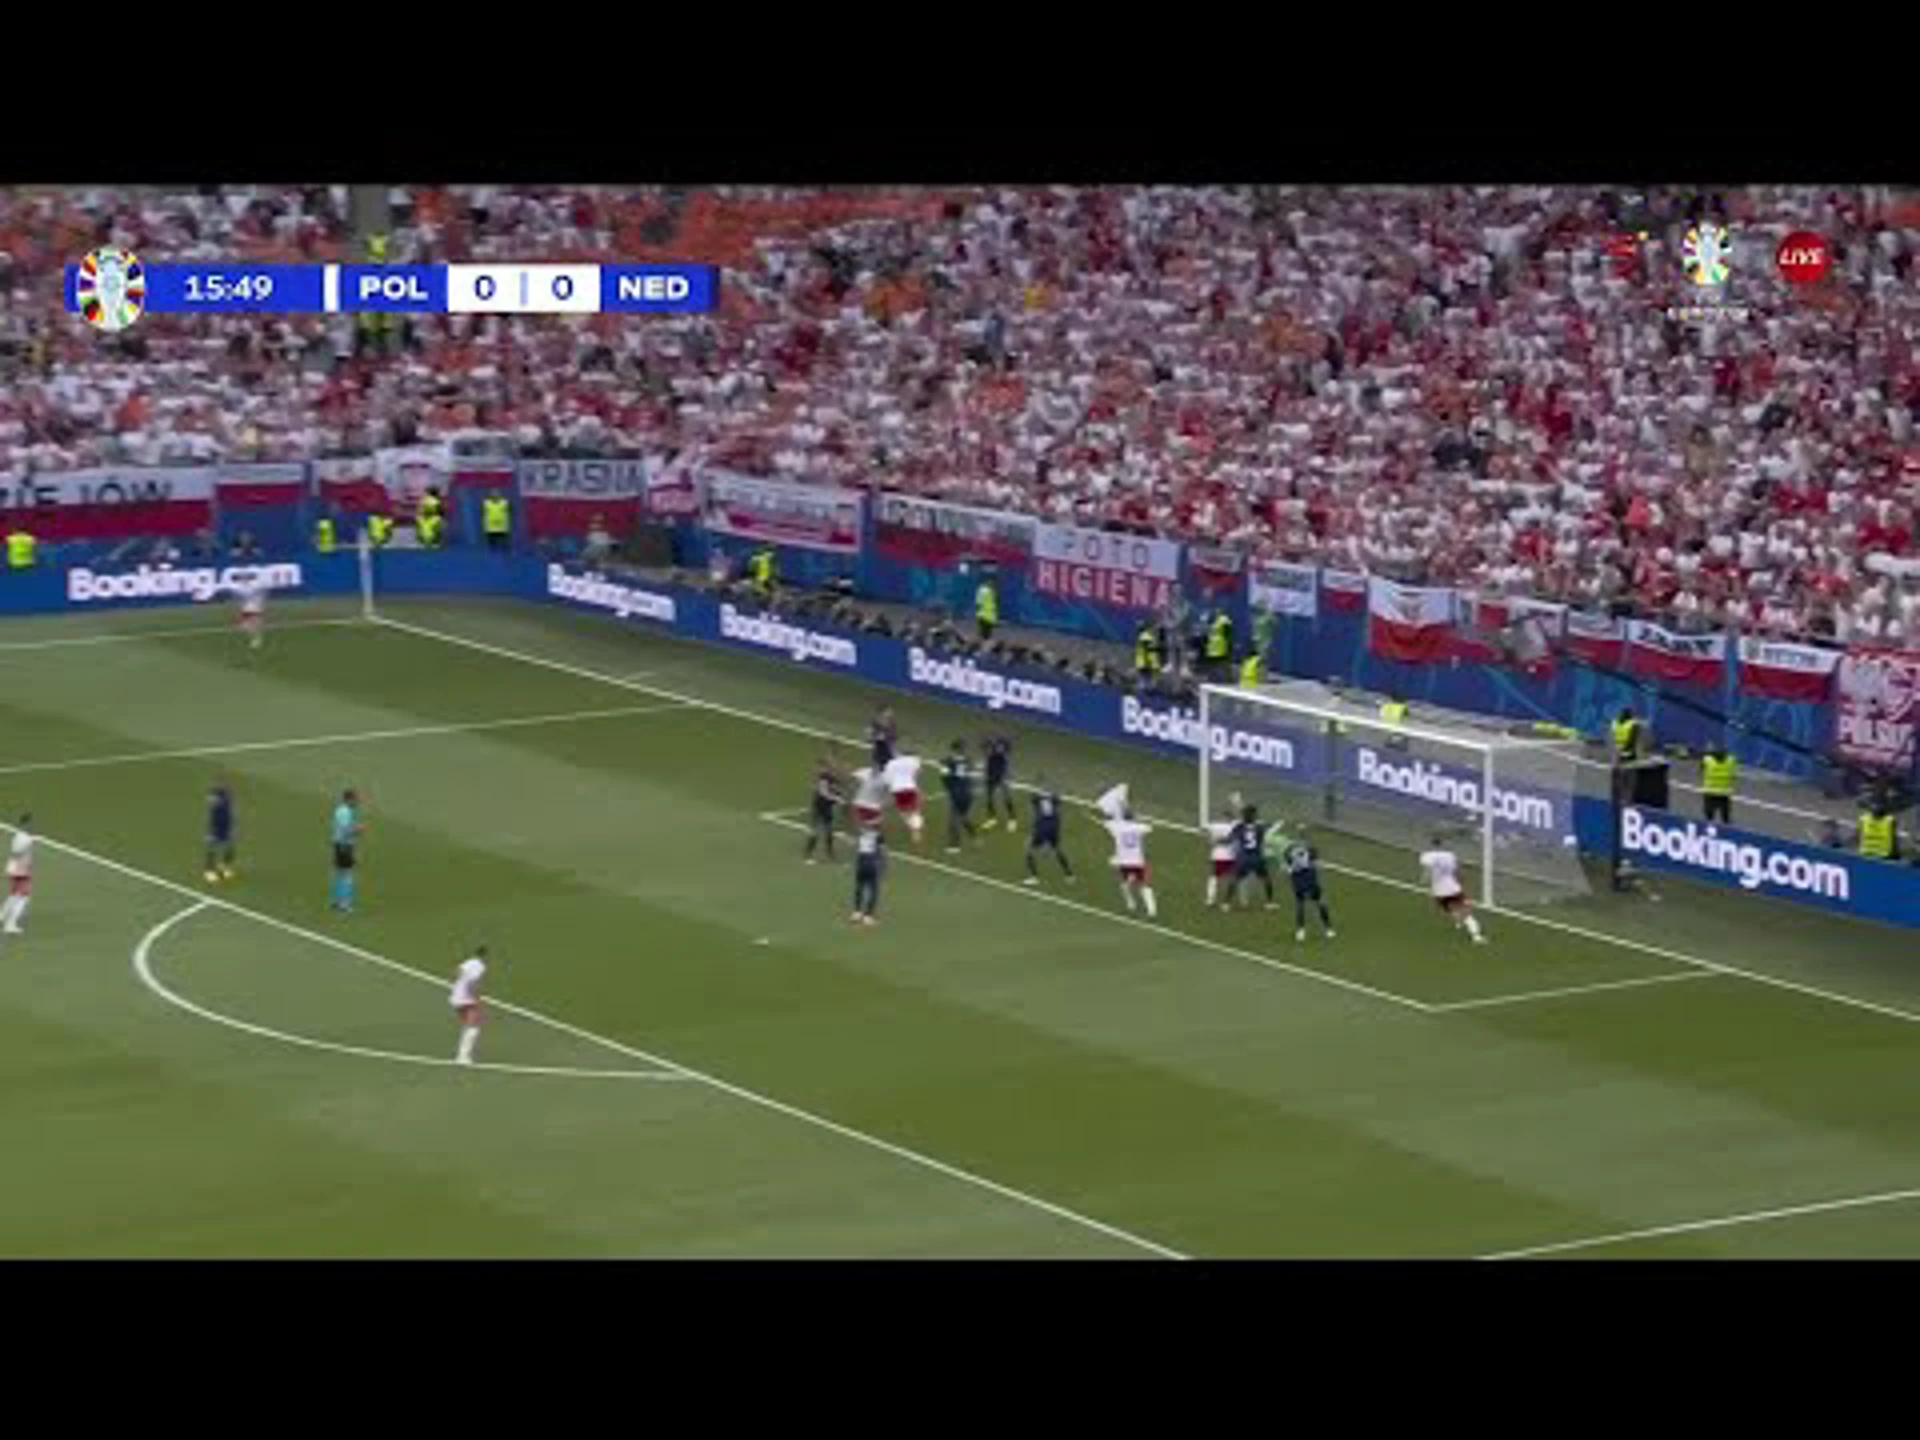 Adam Buksa with a Goal vs. Netherlands